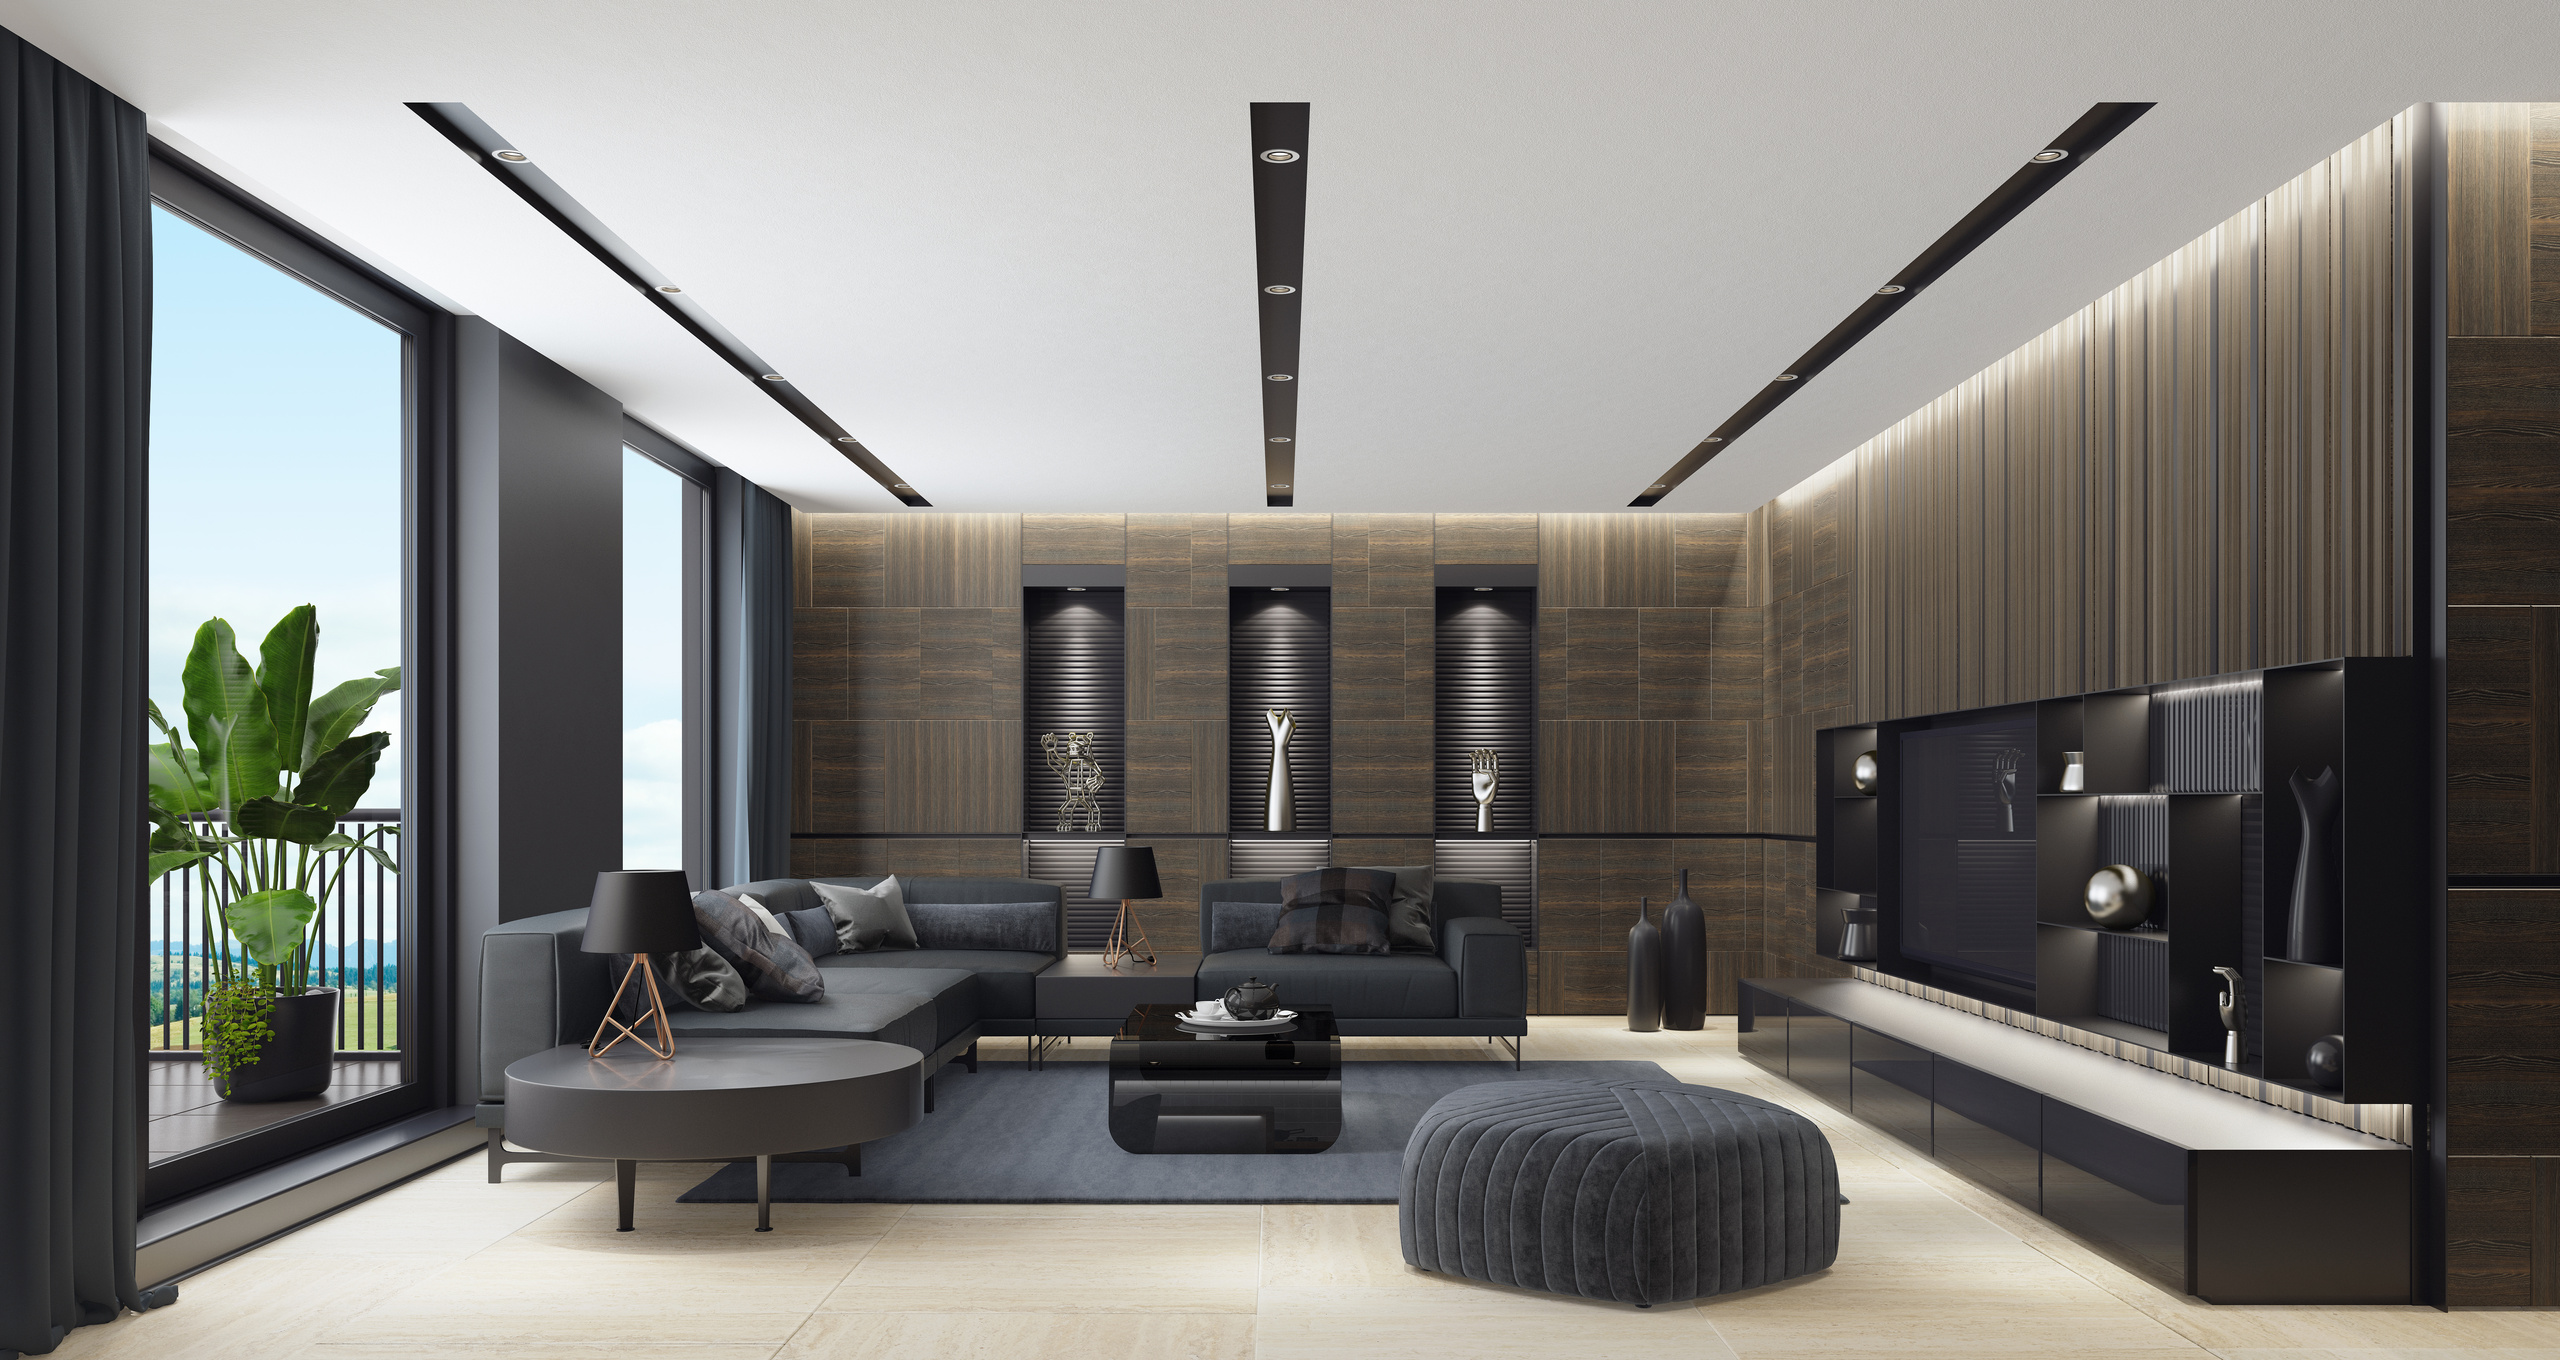 Luxurious apartment with black design living room interior